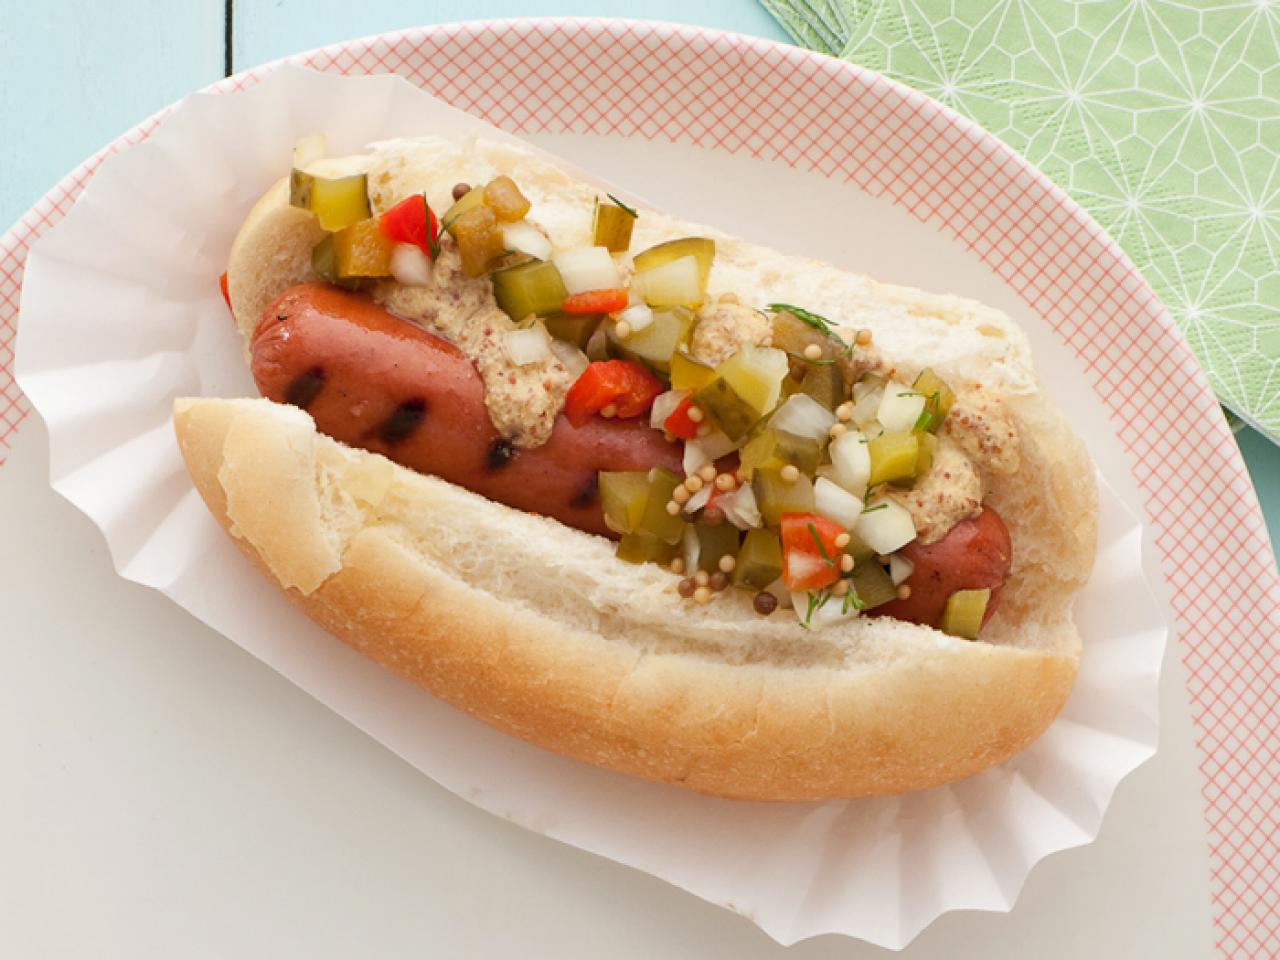 https://food.fnr.sndimg.com/content/dam/images/food/fullset/2010/4/13/0/GC_hot-dog-with-pickle-relish_s4x3.jpg.rend.hgtvcom.1280.960.suffix/1371592835029.jpeg